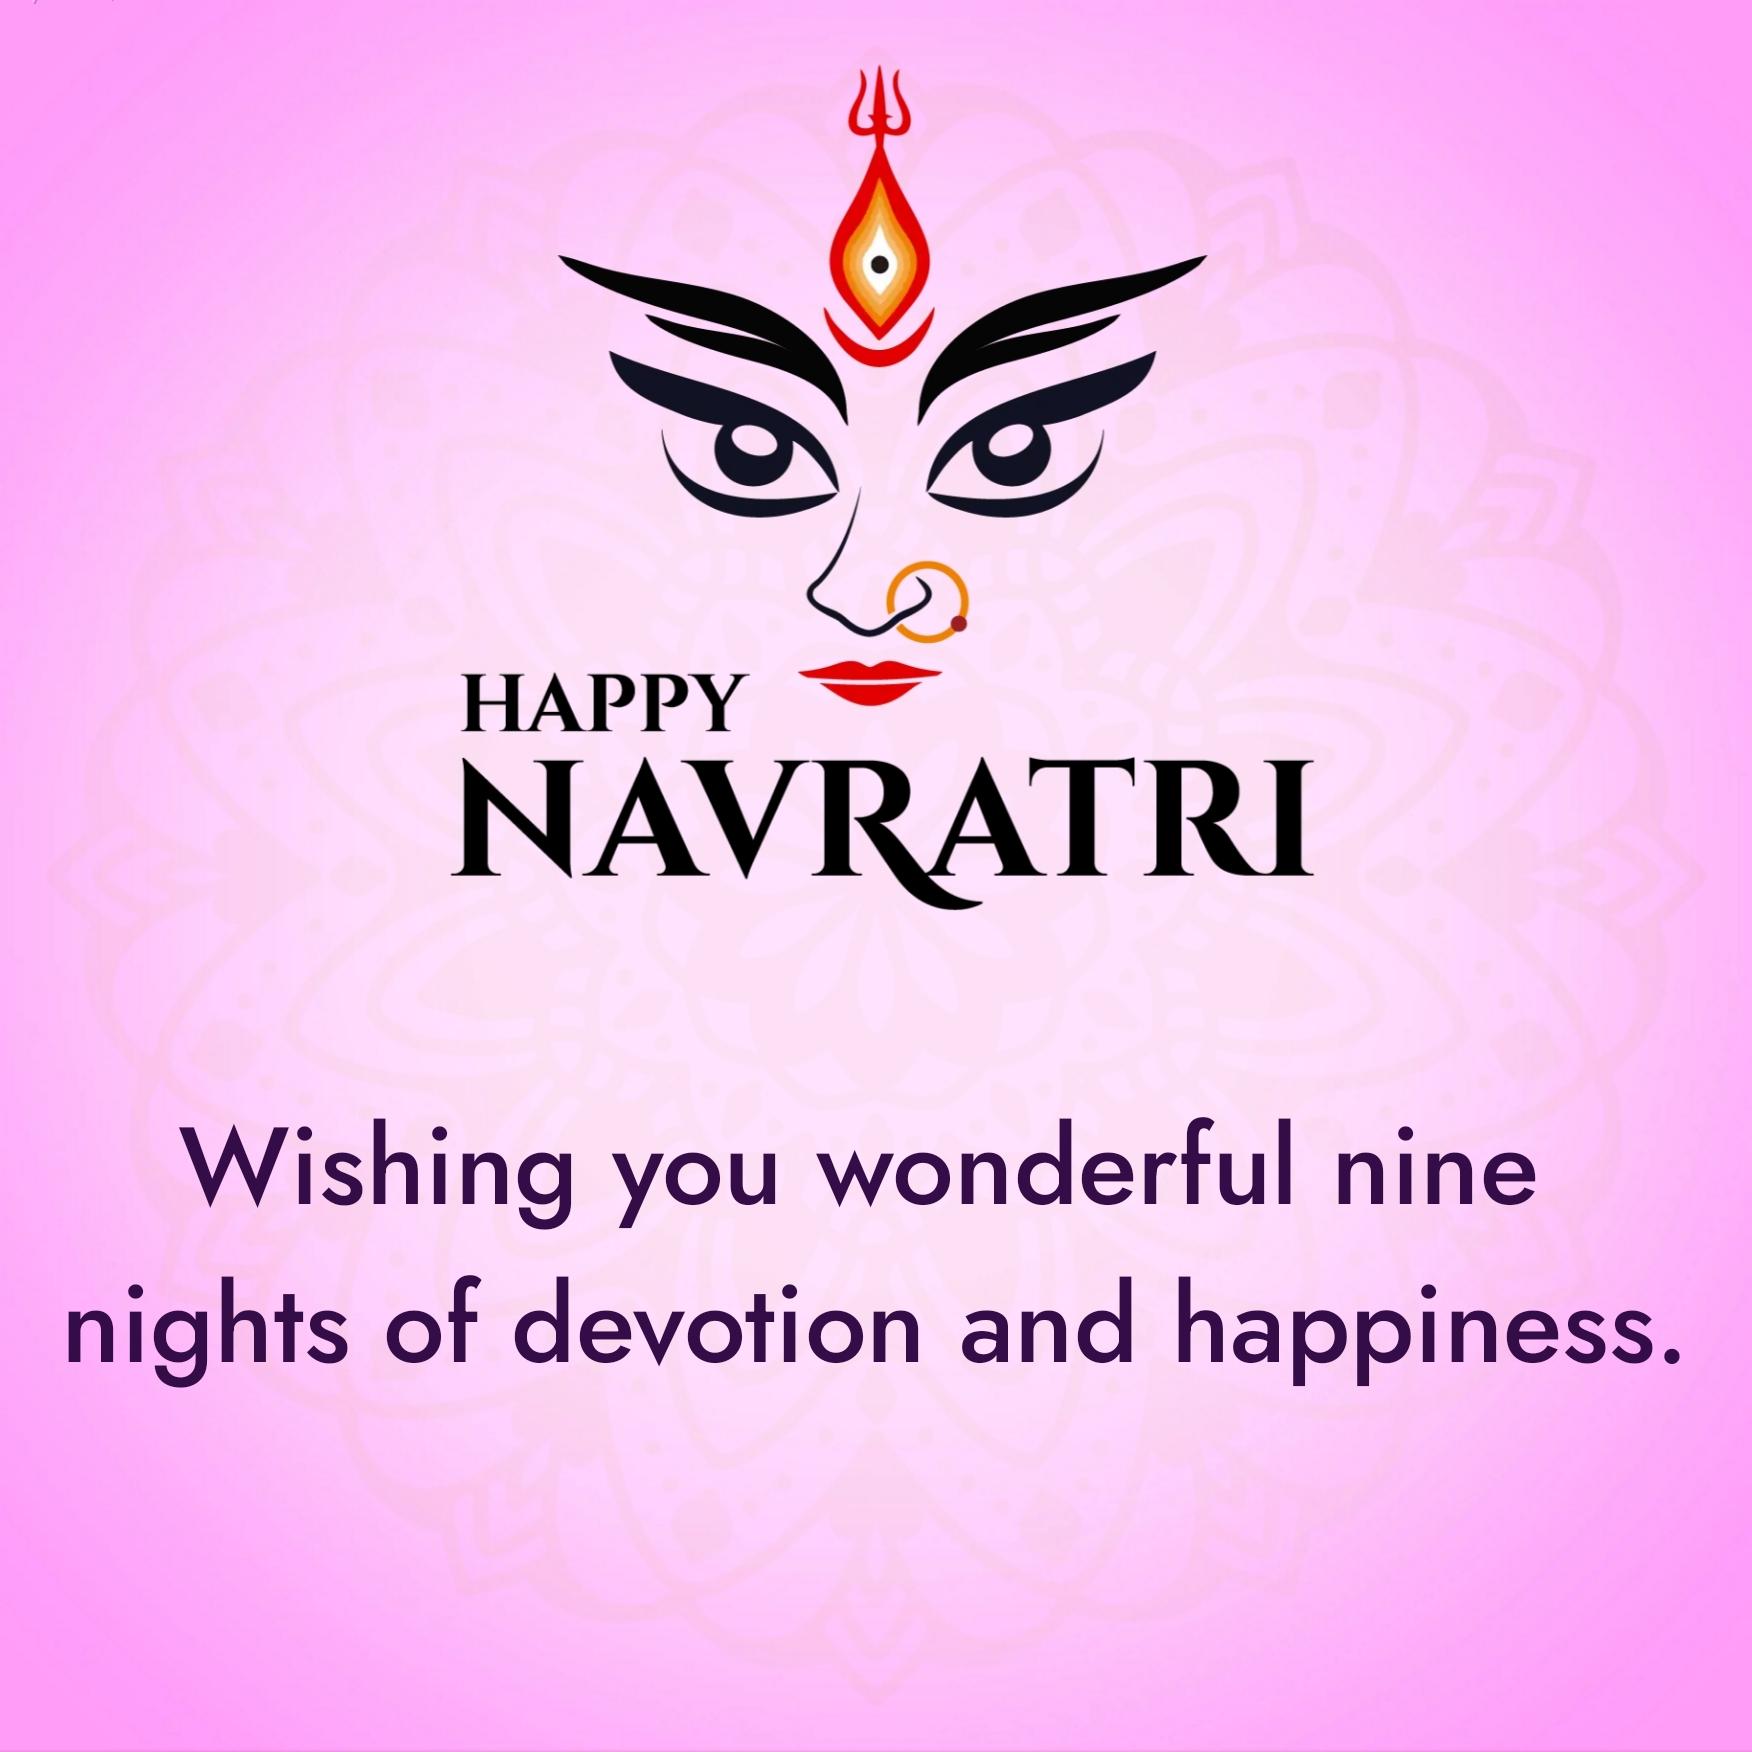 Wishing you wonderful nine nights of devotion and happiness